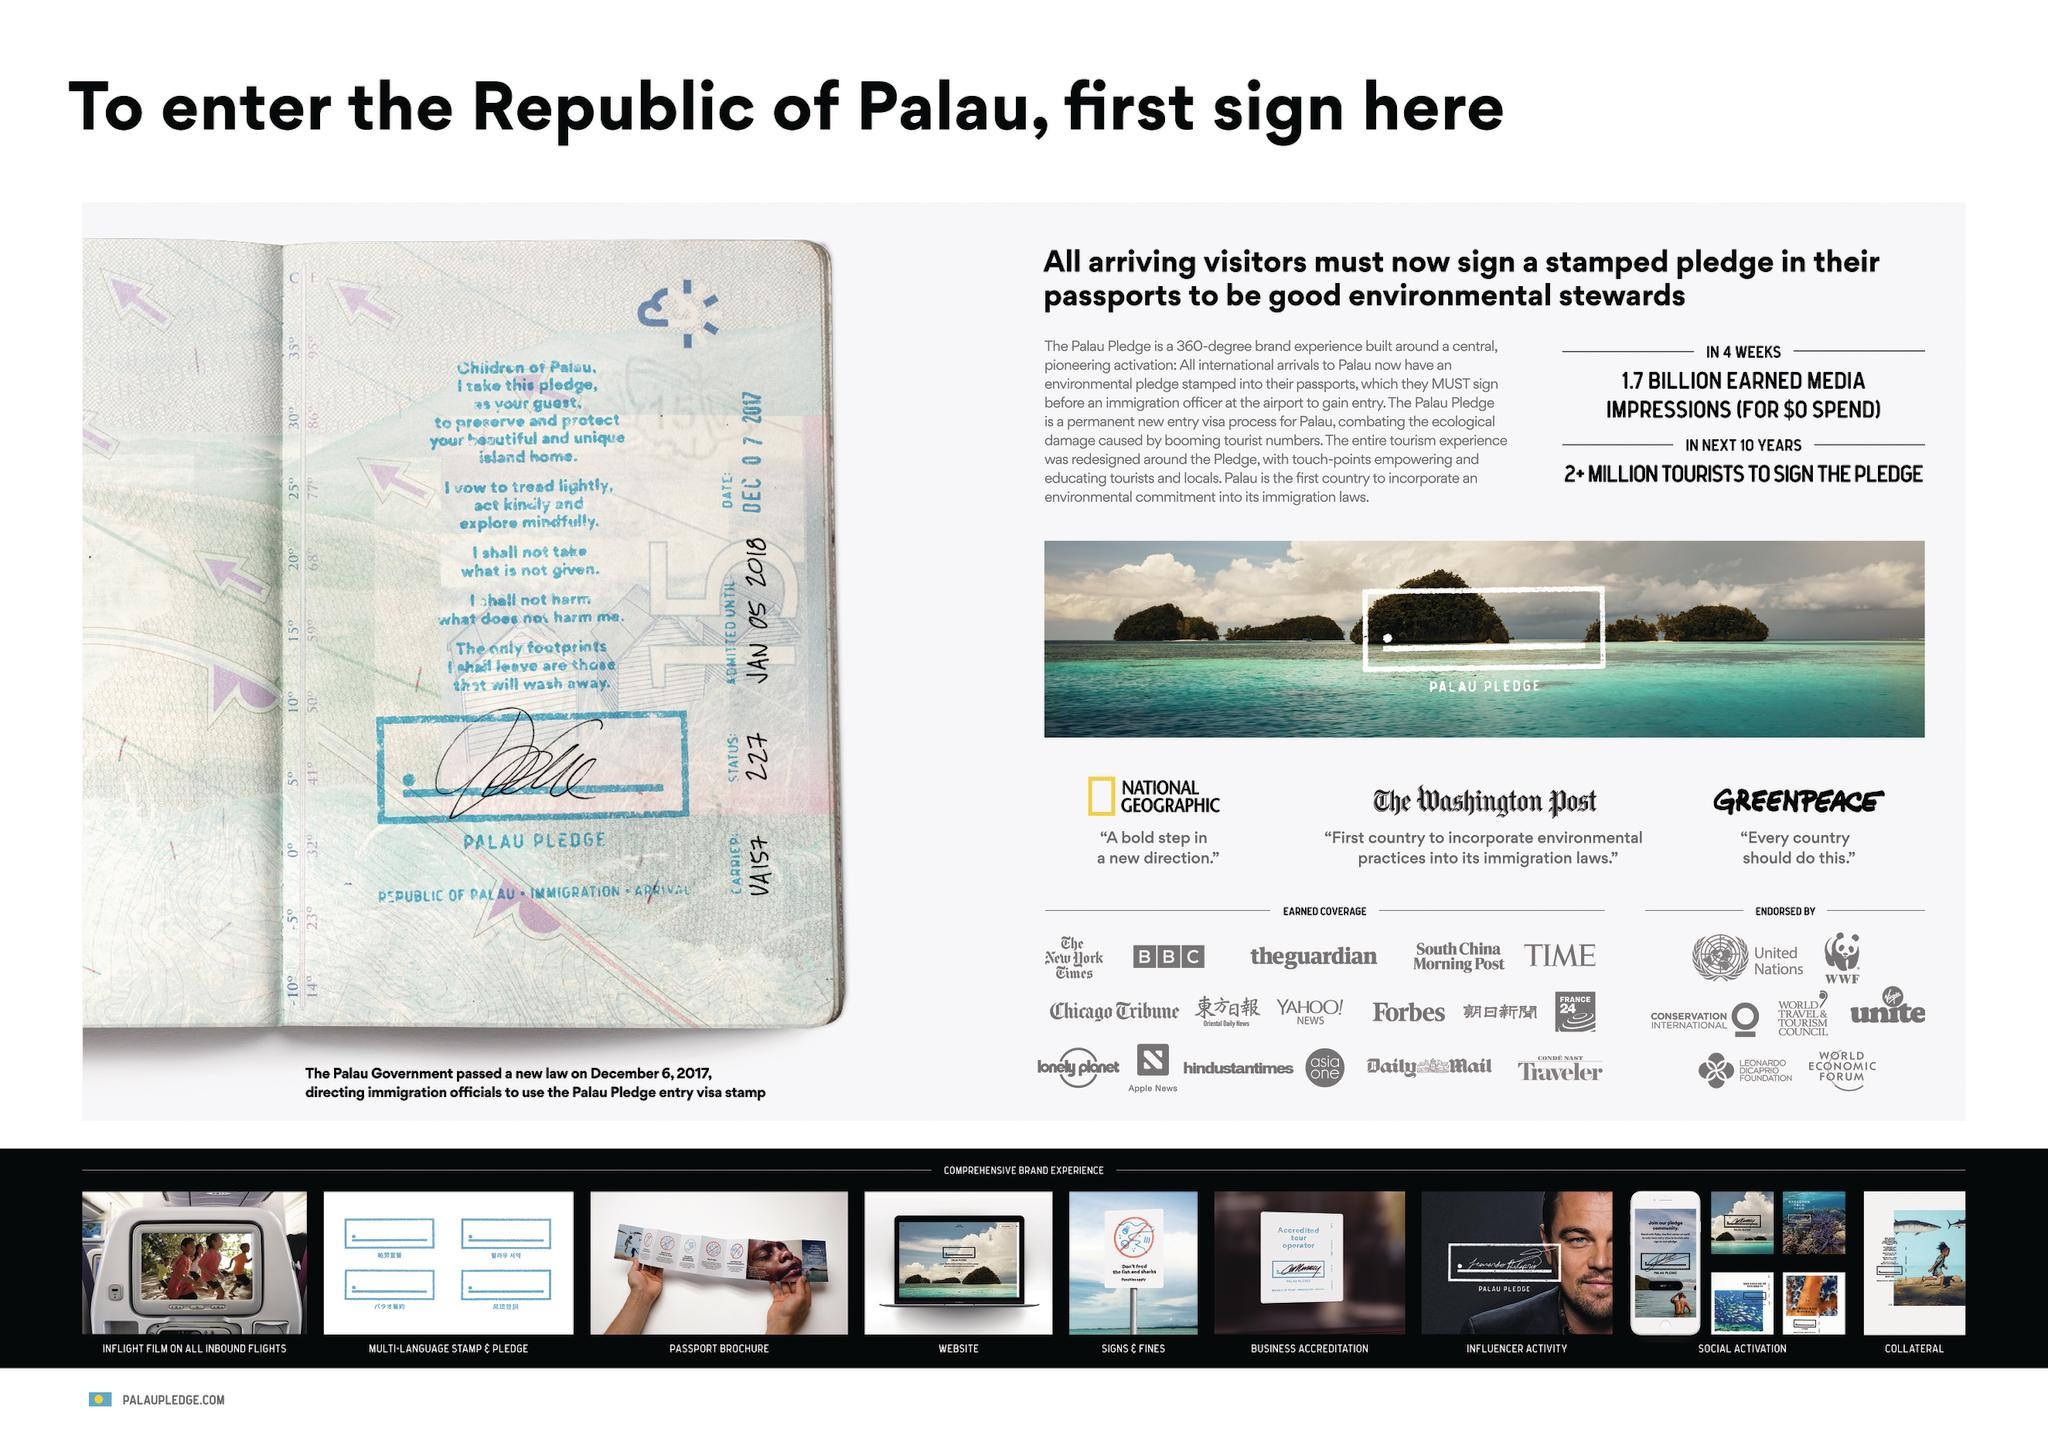 Palau Pledge